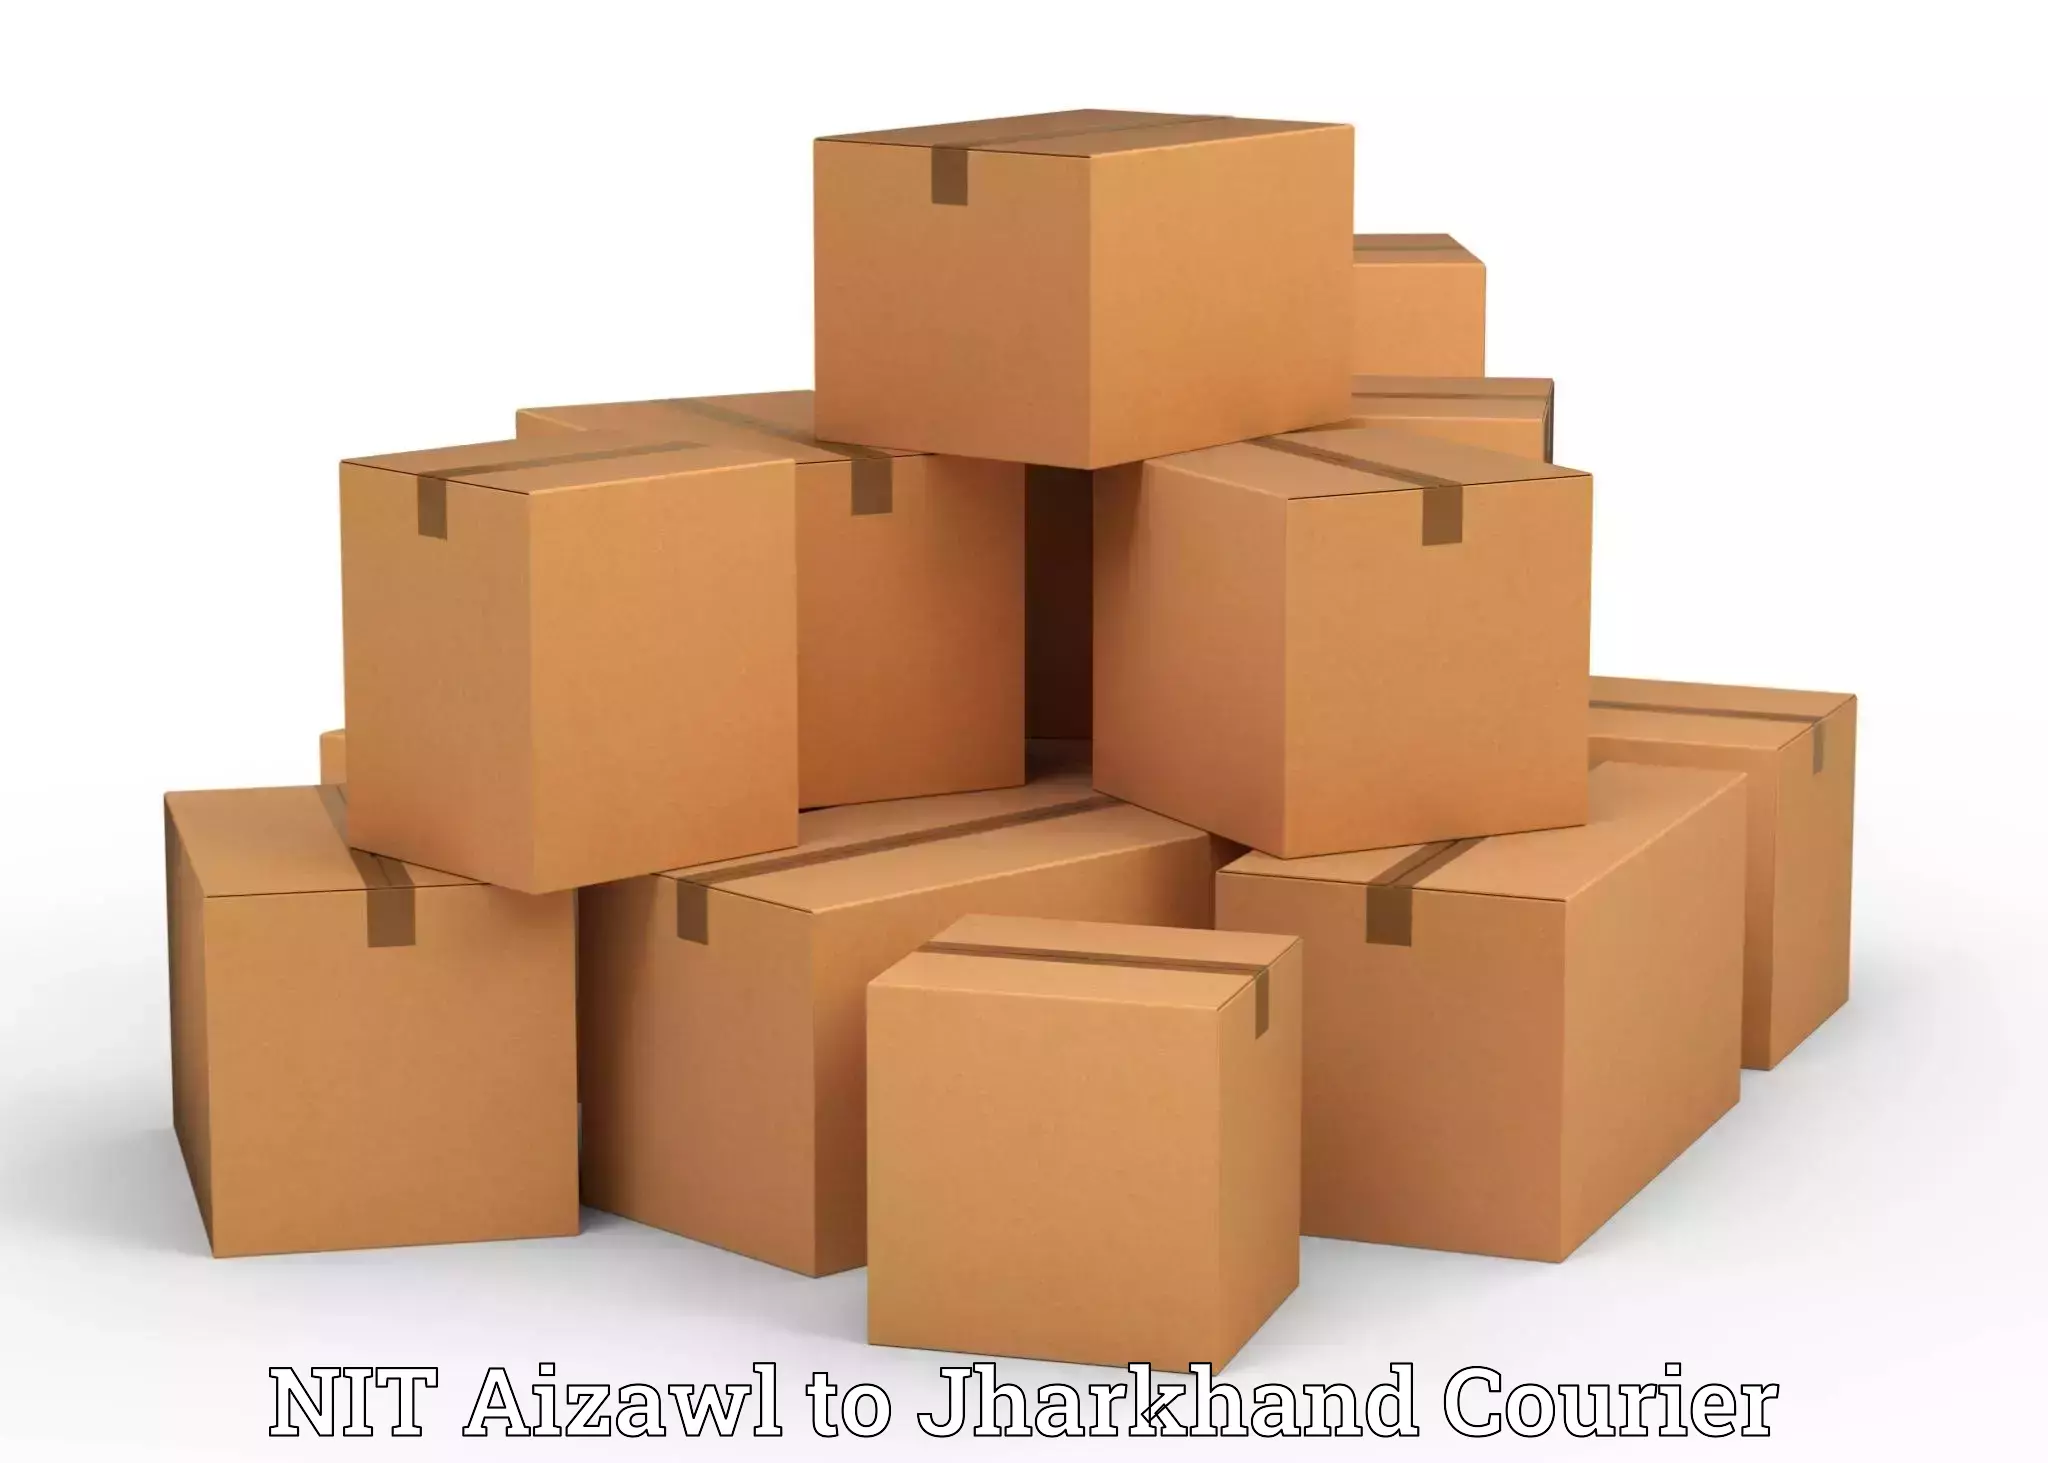 Moving and packing experts NIT Aizawl to Chandankiyari